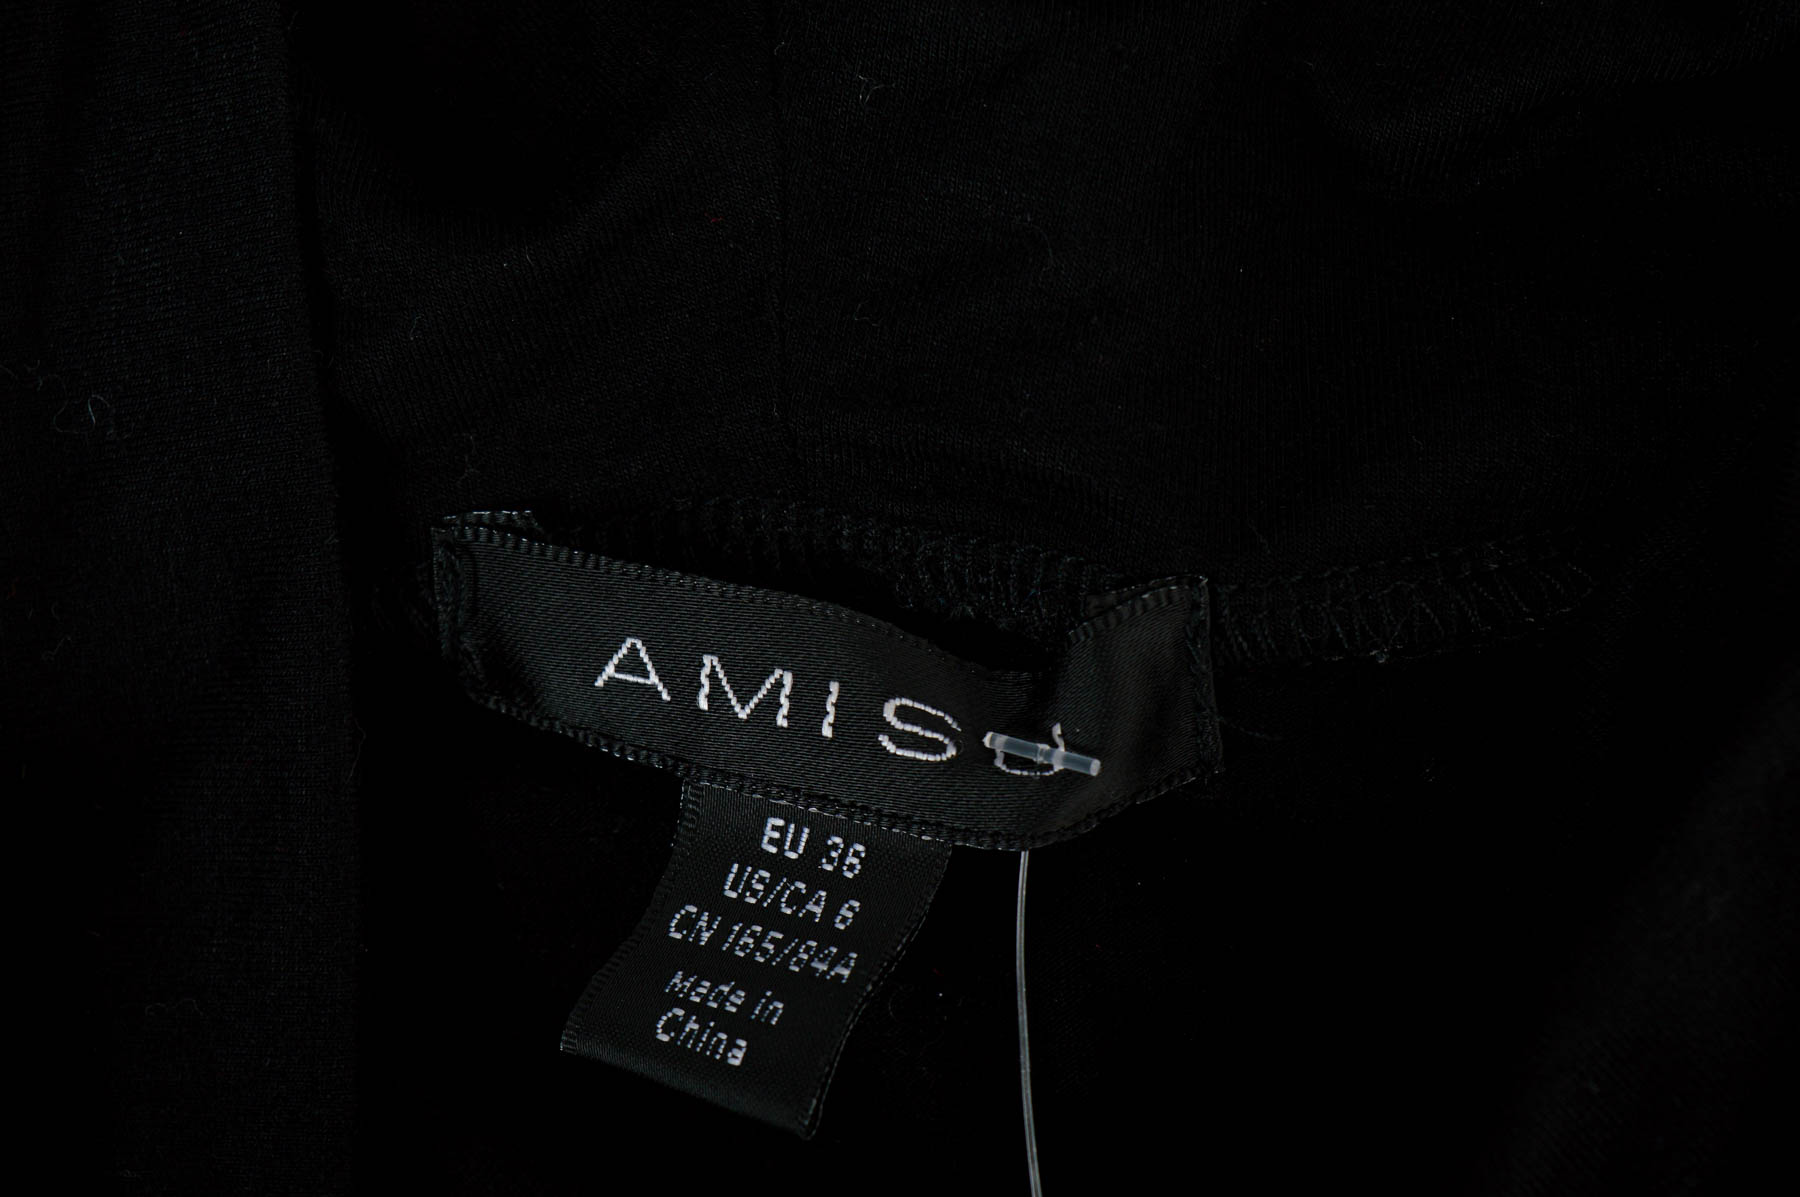 Dress - AMISU - 2